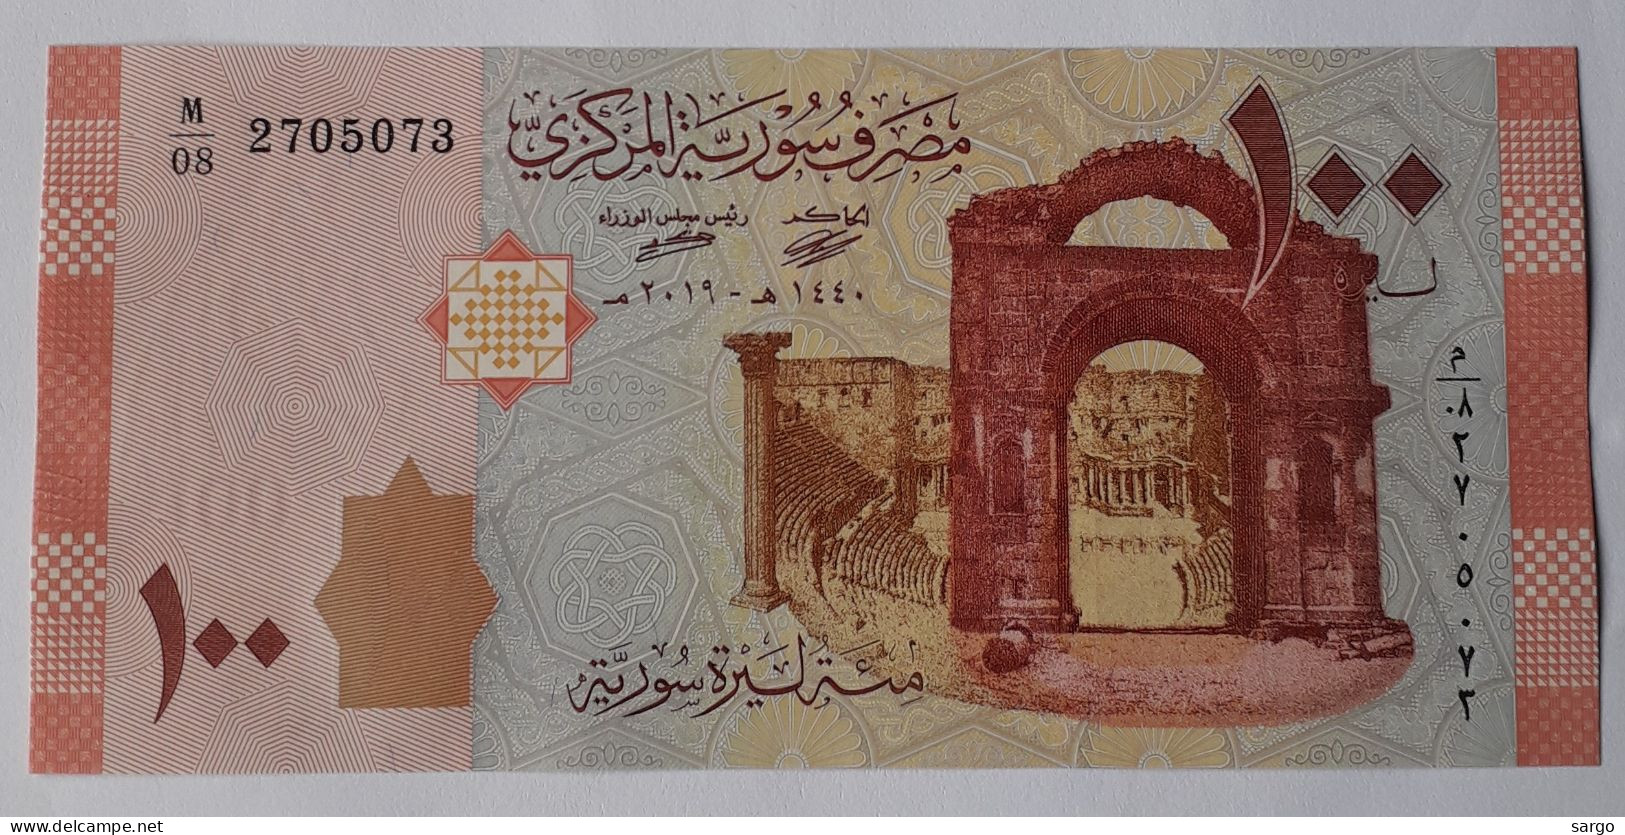 SYRIA  - 100 POUND - P 113b  (2019) - UNC -  BANKNOTES - PAPER MONEY - Syrië